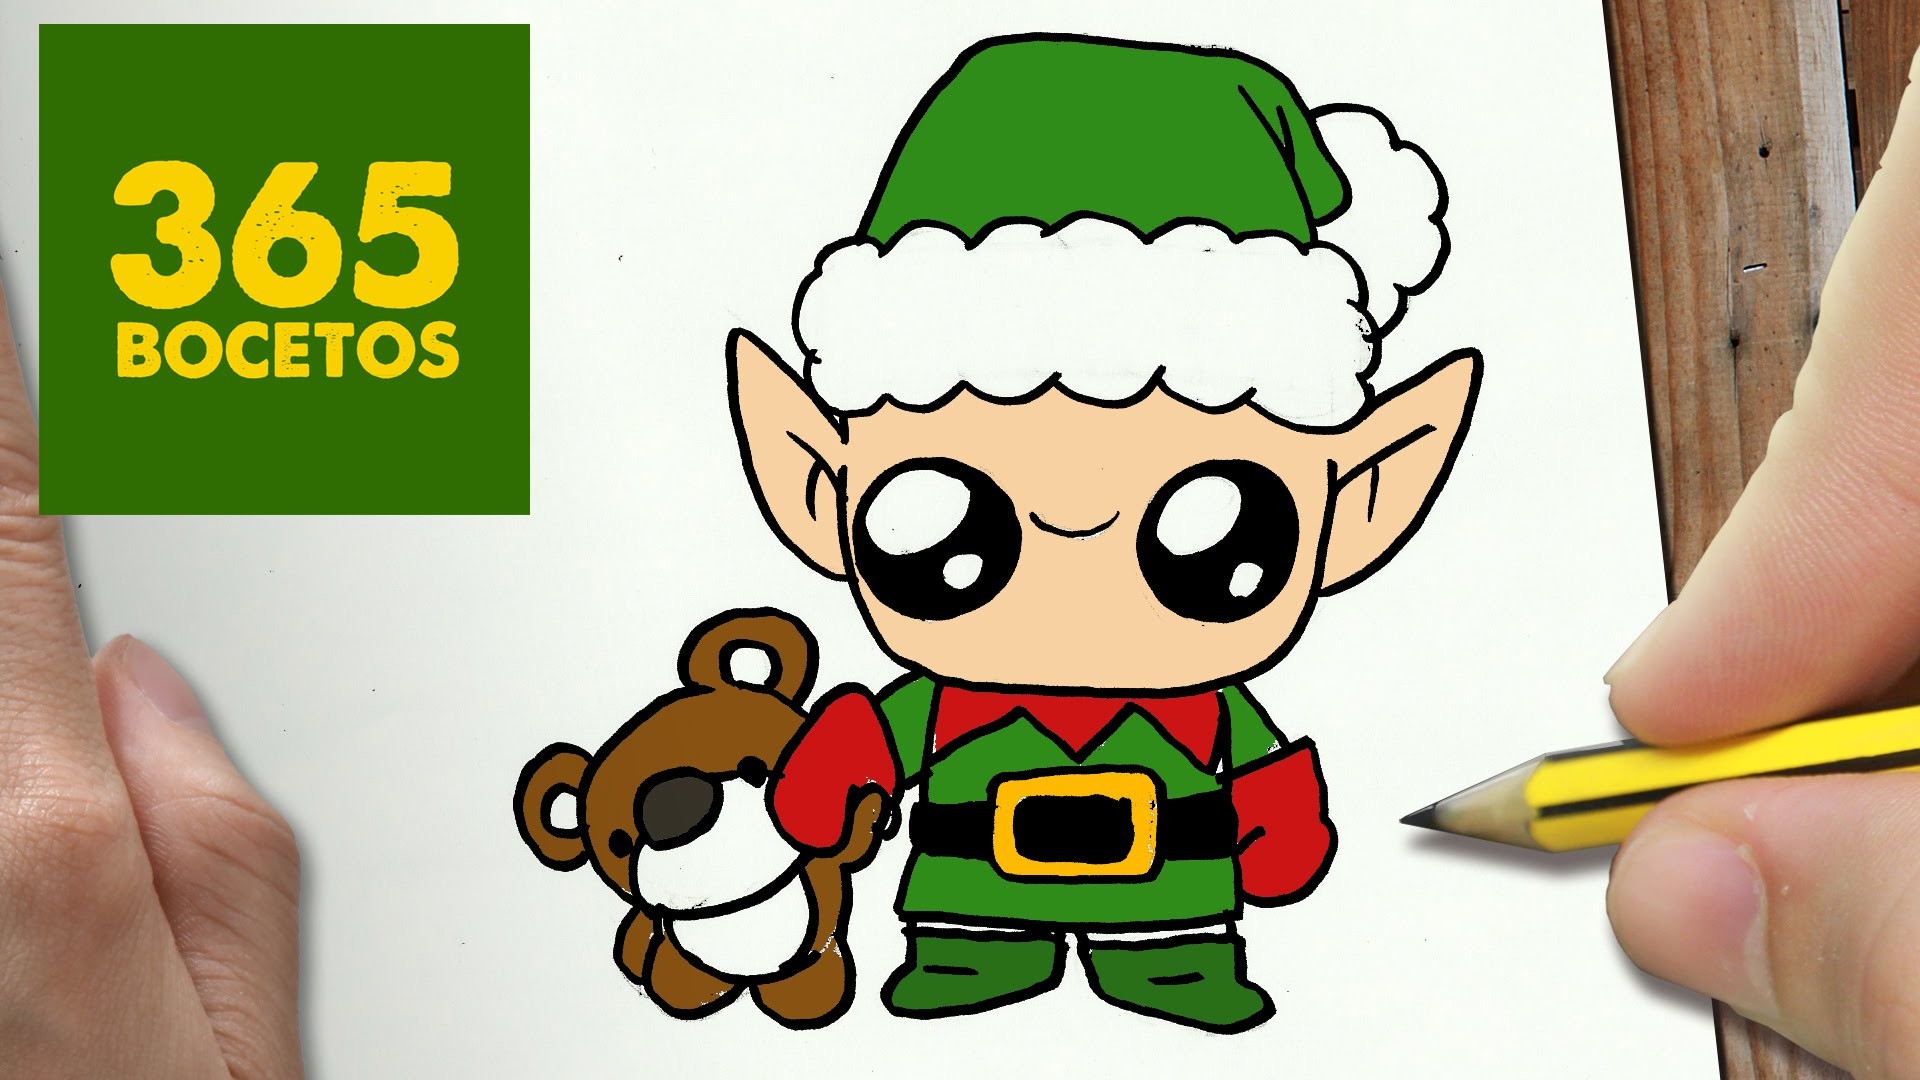 COMO DIBUJAR UN ELFO PARA NAVIDAD PASO A PASO: Dibujos kawaii navideños - How to draw a Elfa